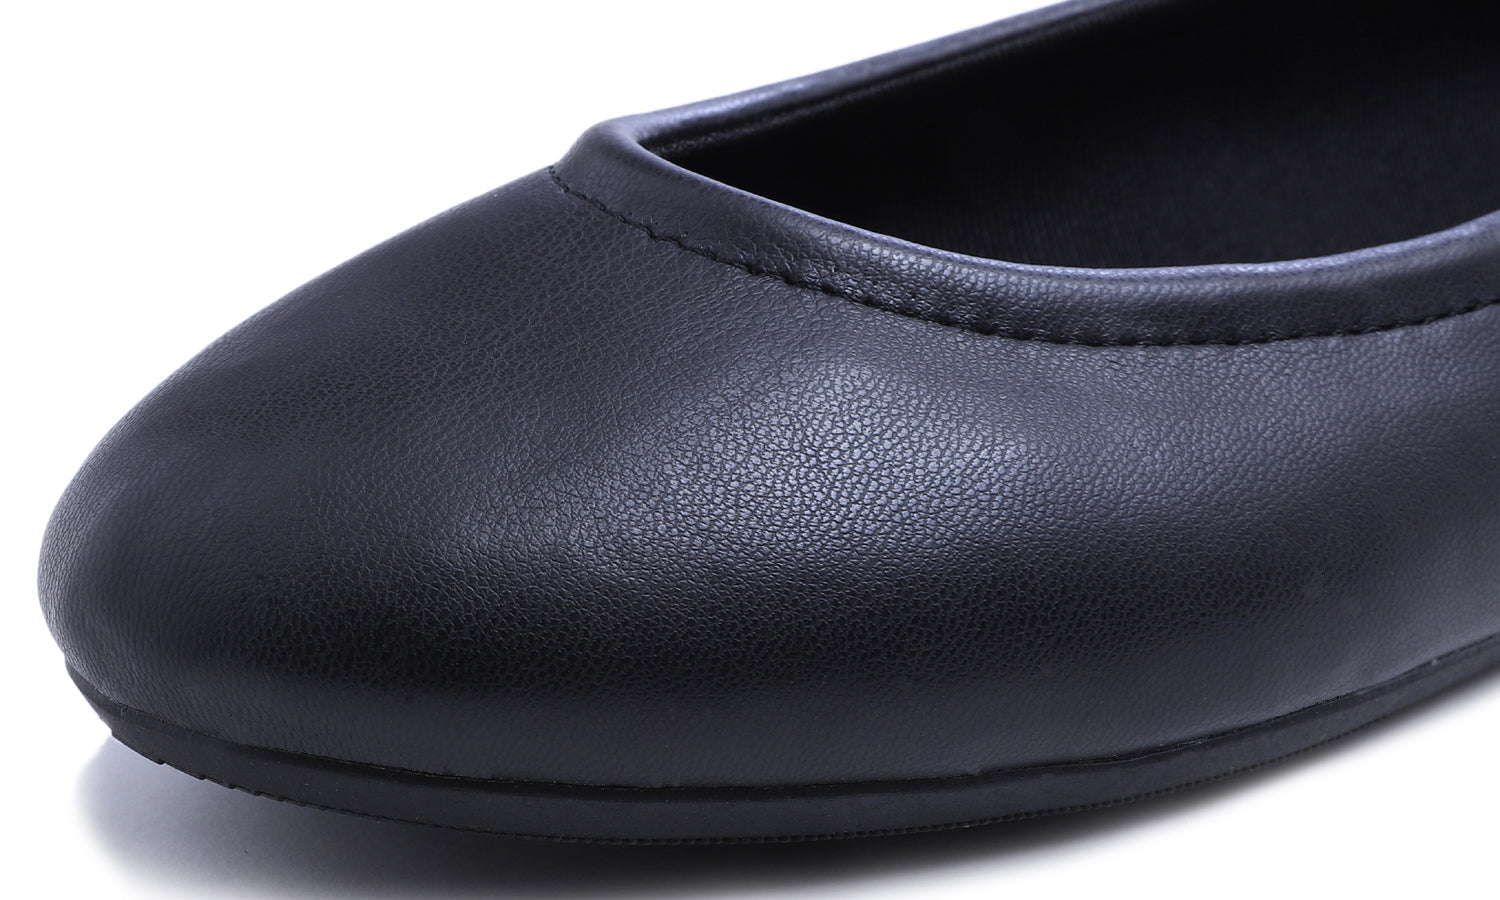 Feversole Women's Soft Cushion Comfort Round Toe Elastic Adjustable Ballet Flats Flexible Walking Shoes Black Napa